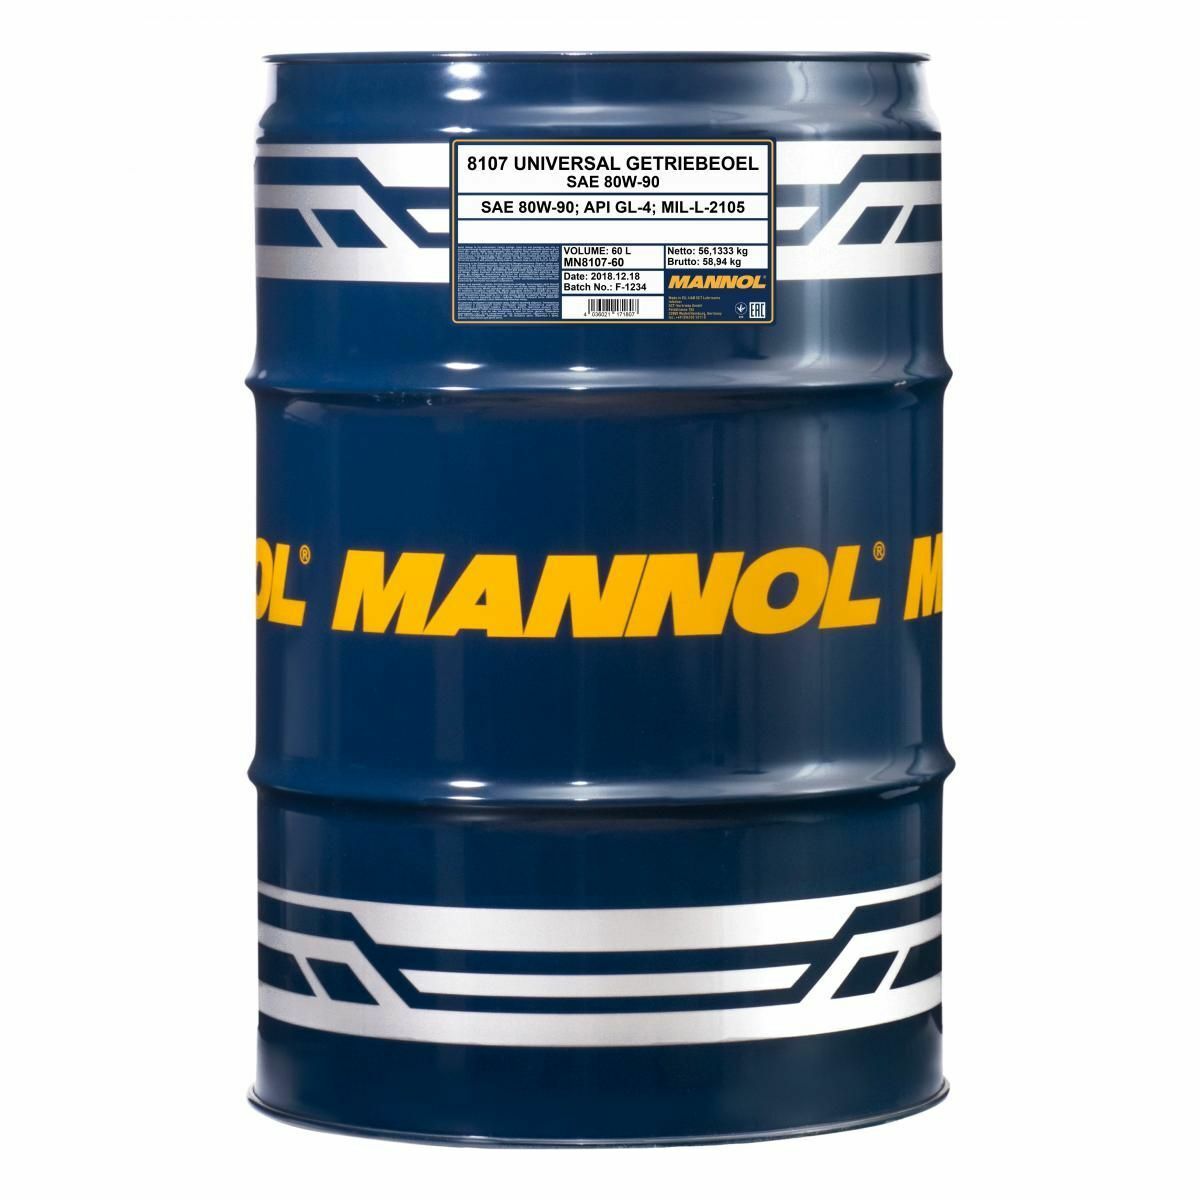 60 Liter MANNOL Universal Getriebeöl 80W-90 API GL 4 80W90 Getriebe Öl